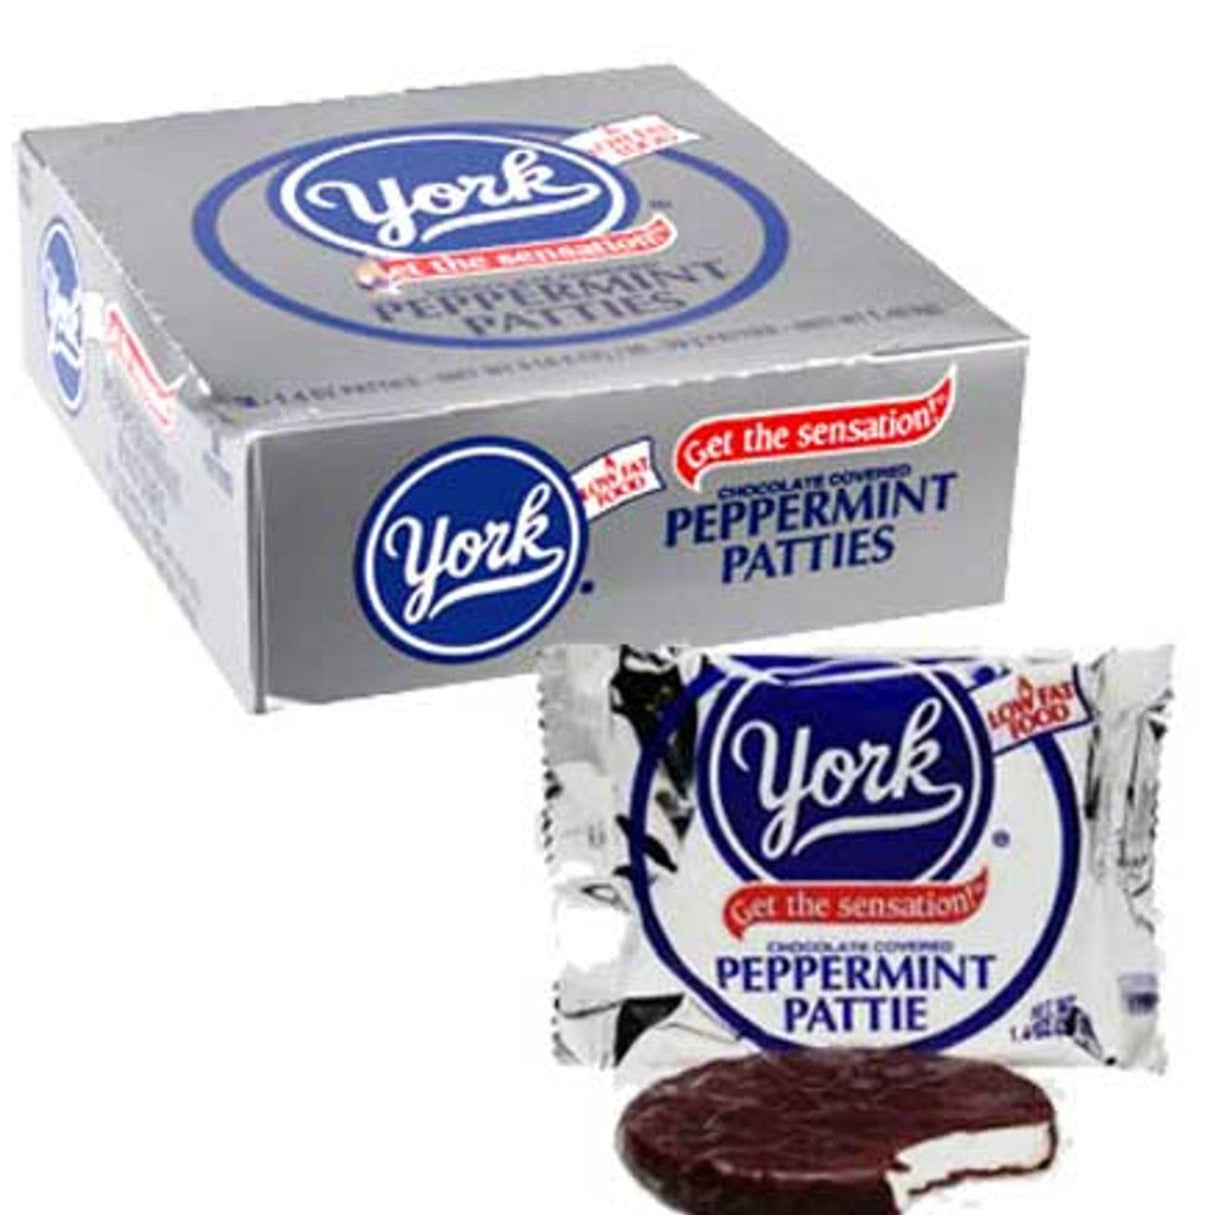 York Peppermint Pattie 1.4oz - 36ct